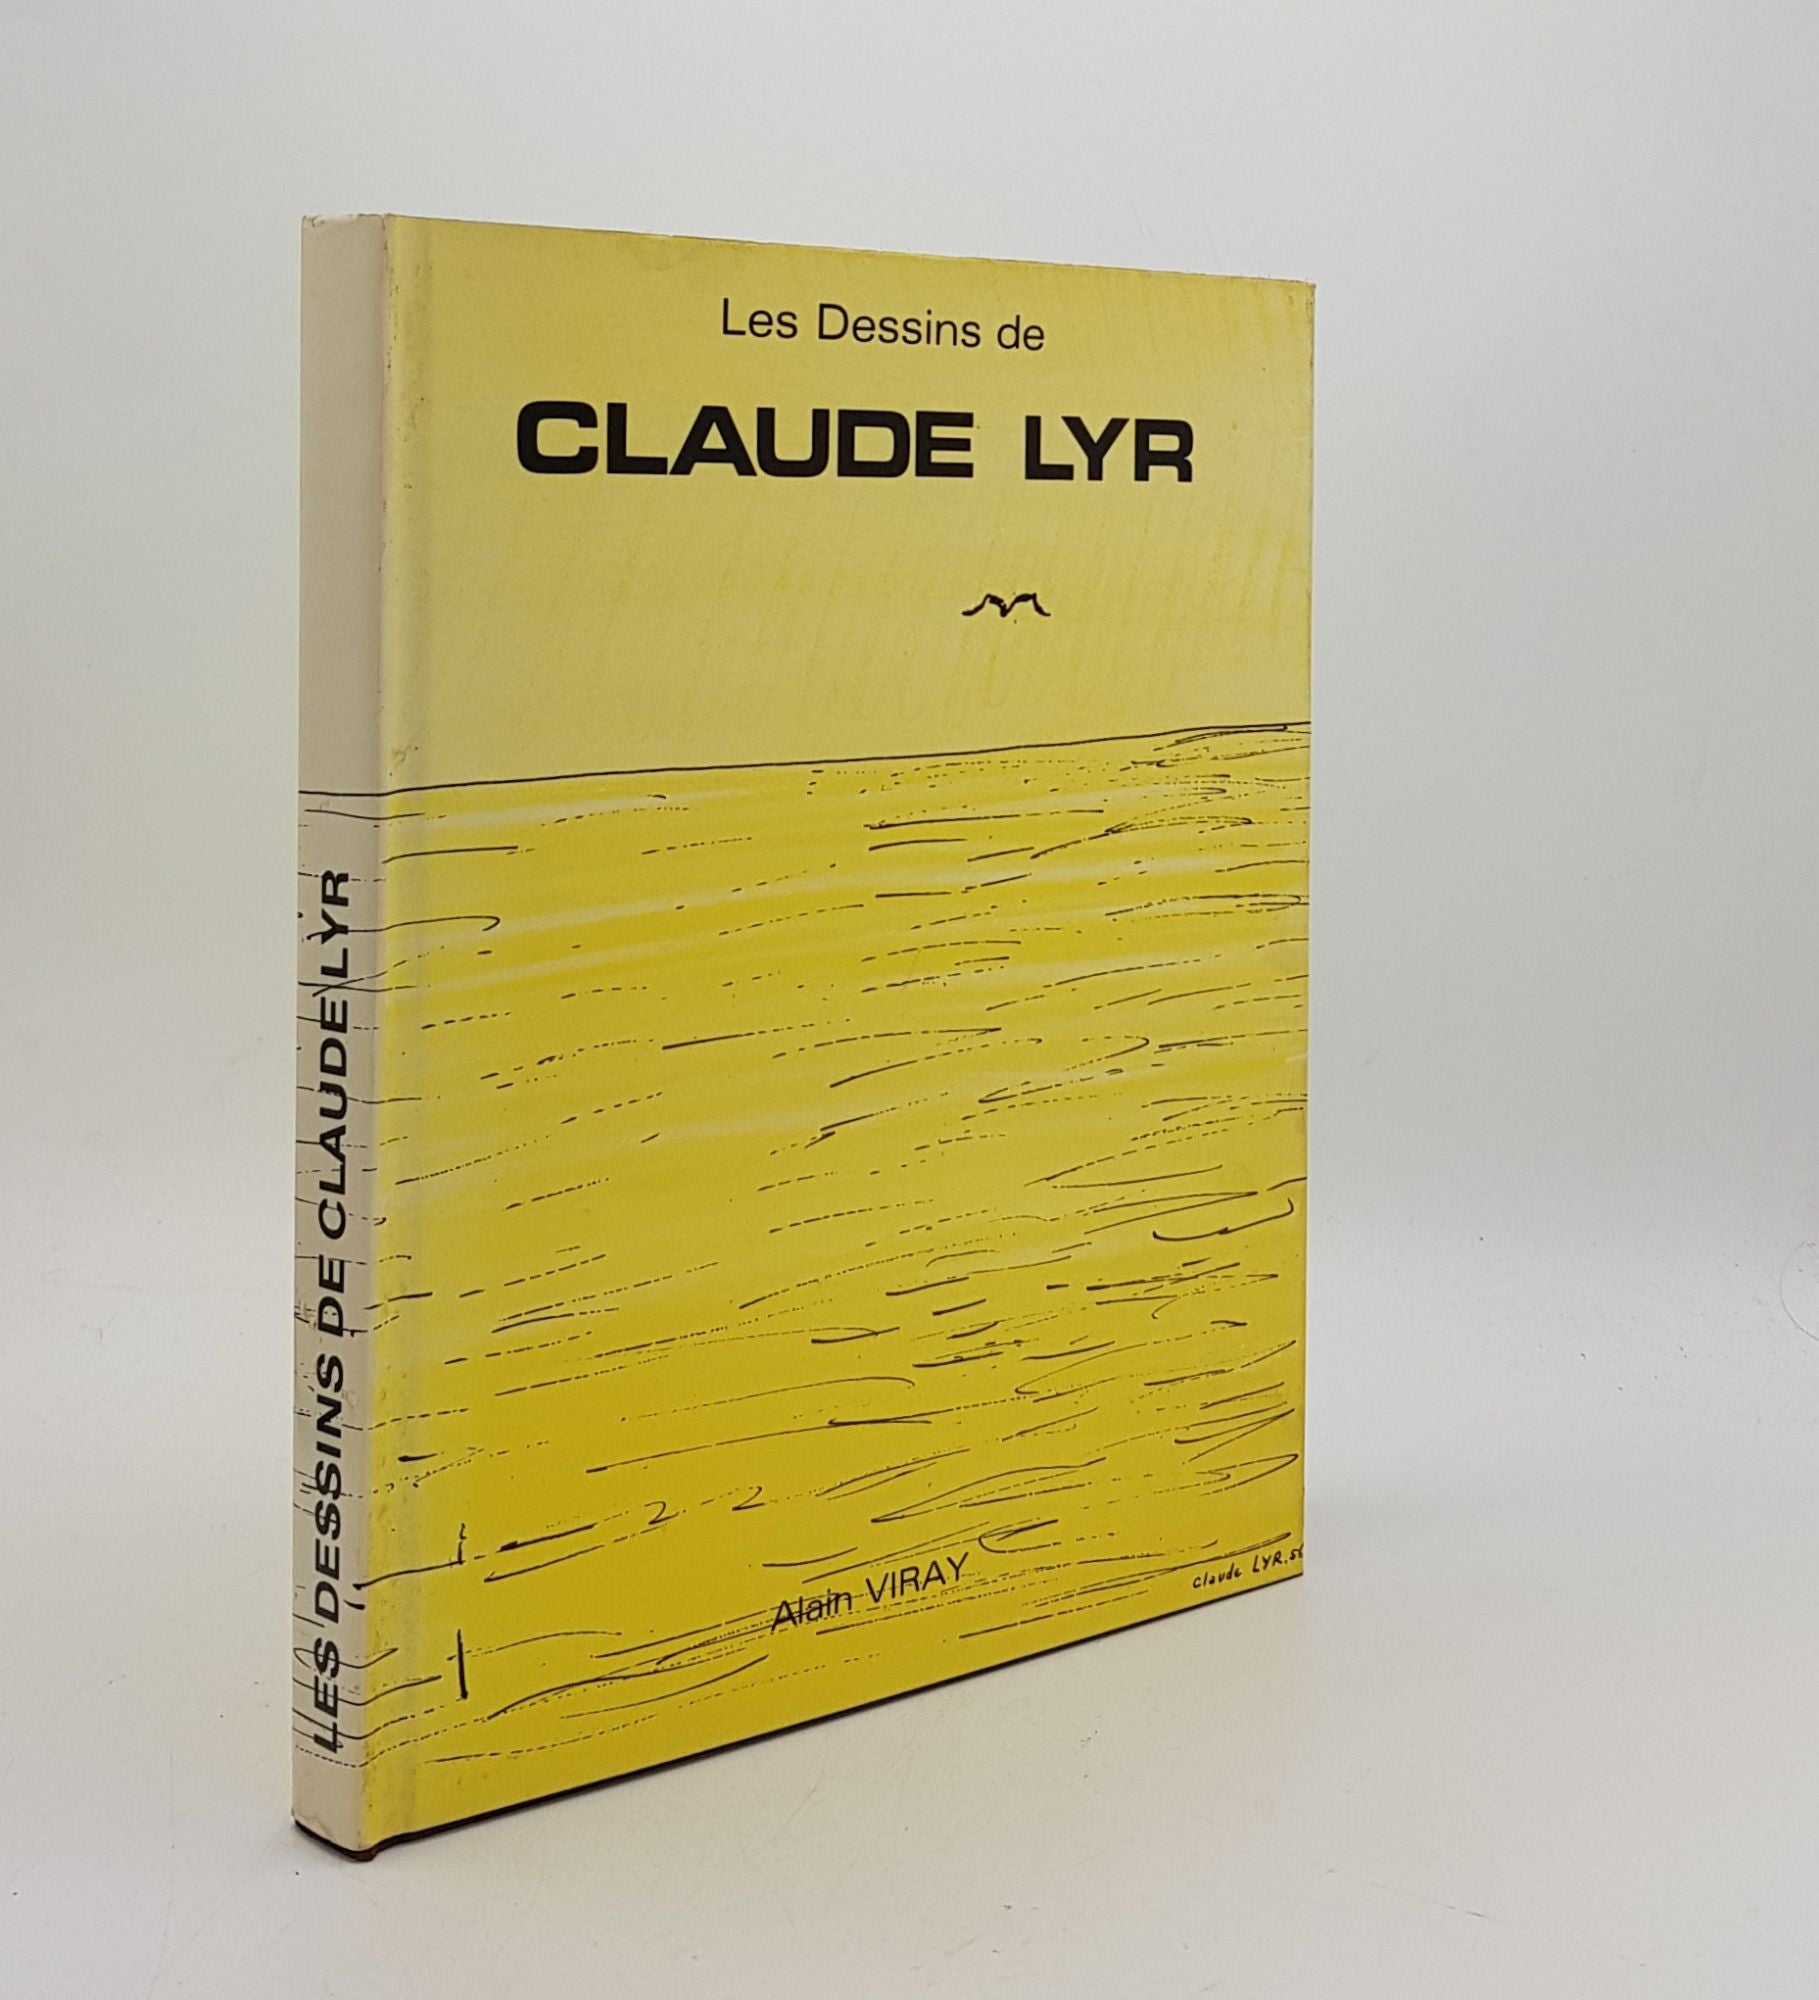 VIRAY Alain - Les Dessins de Claude Lyr